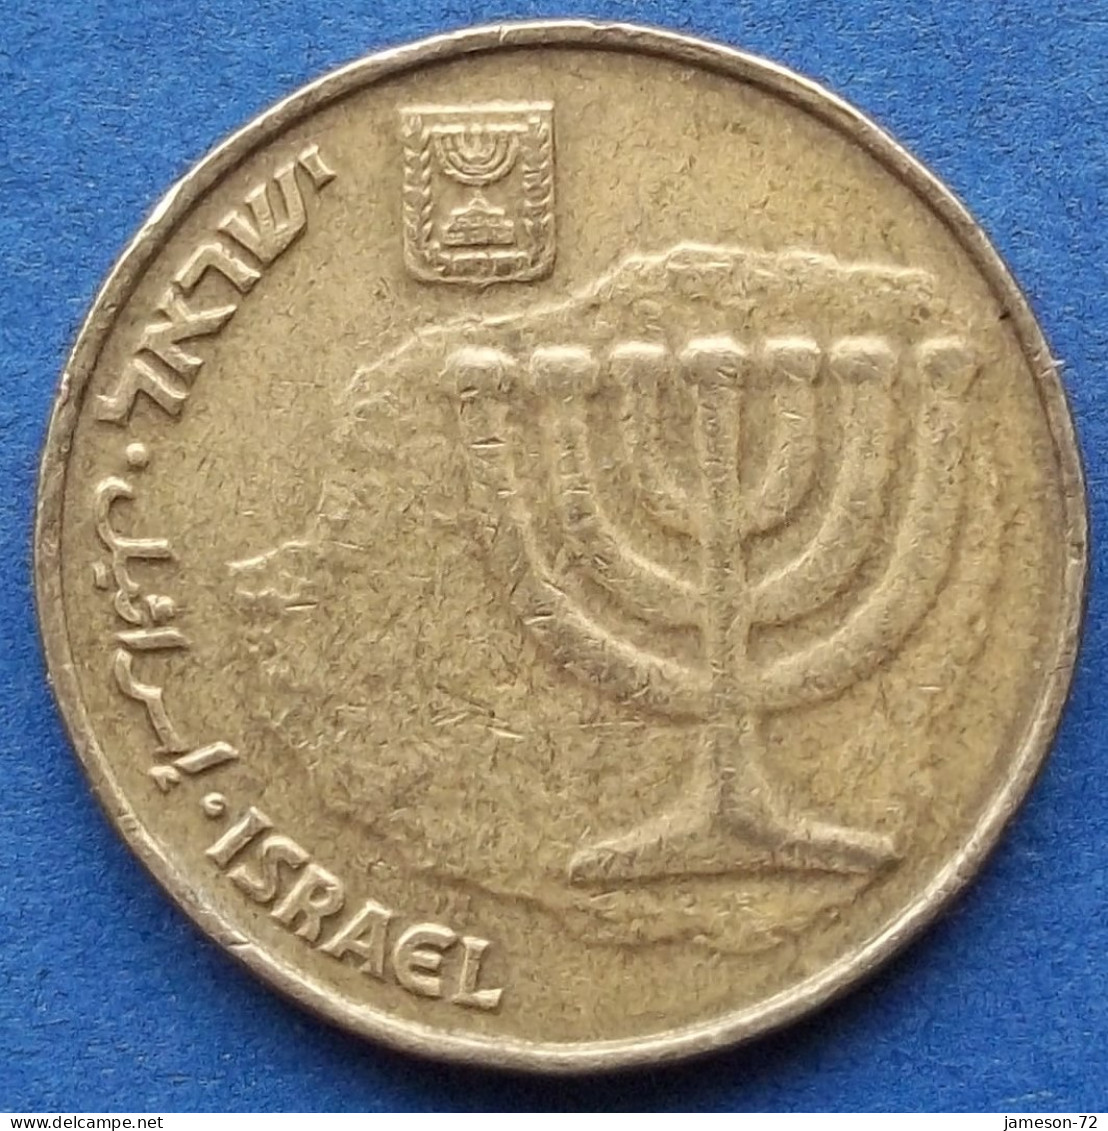 ISRAEL - 10 Agorot JE 5770 (2010AD) "Menorah" KM# 158 Monetary Reform (1985) - Edelweiss Coins - Israel